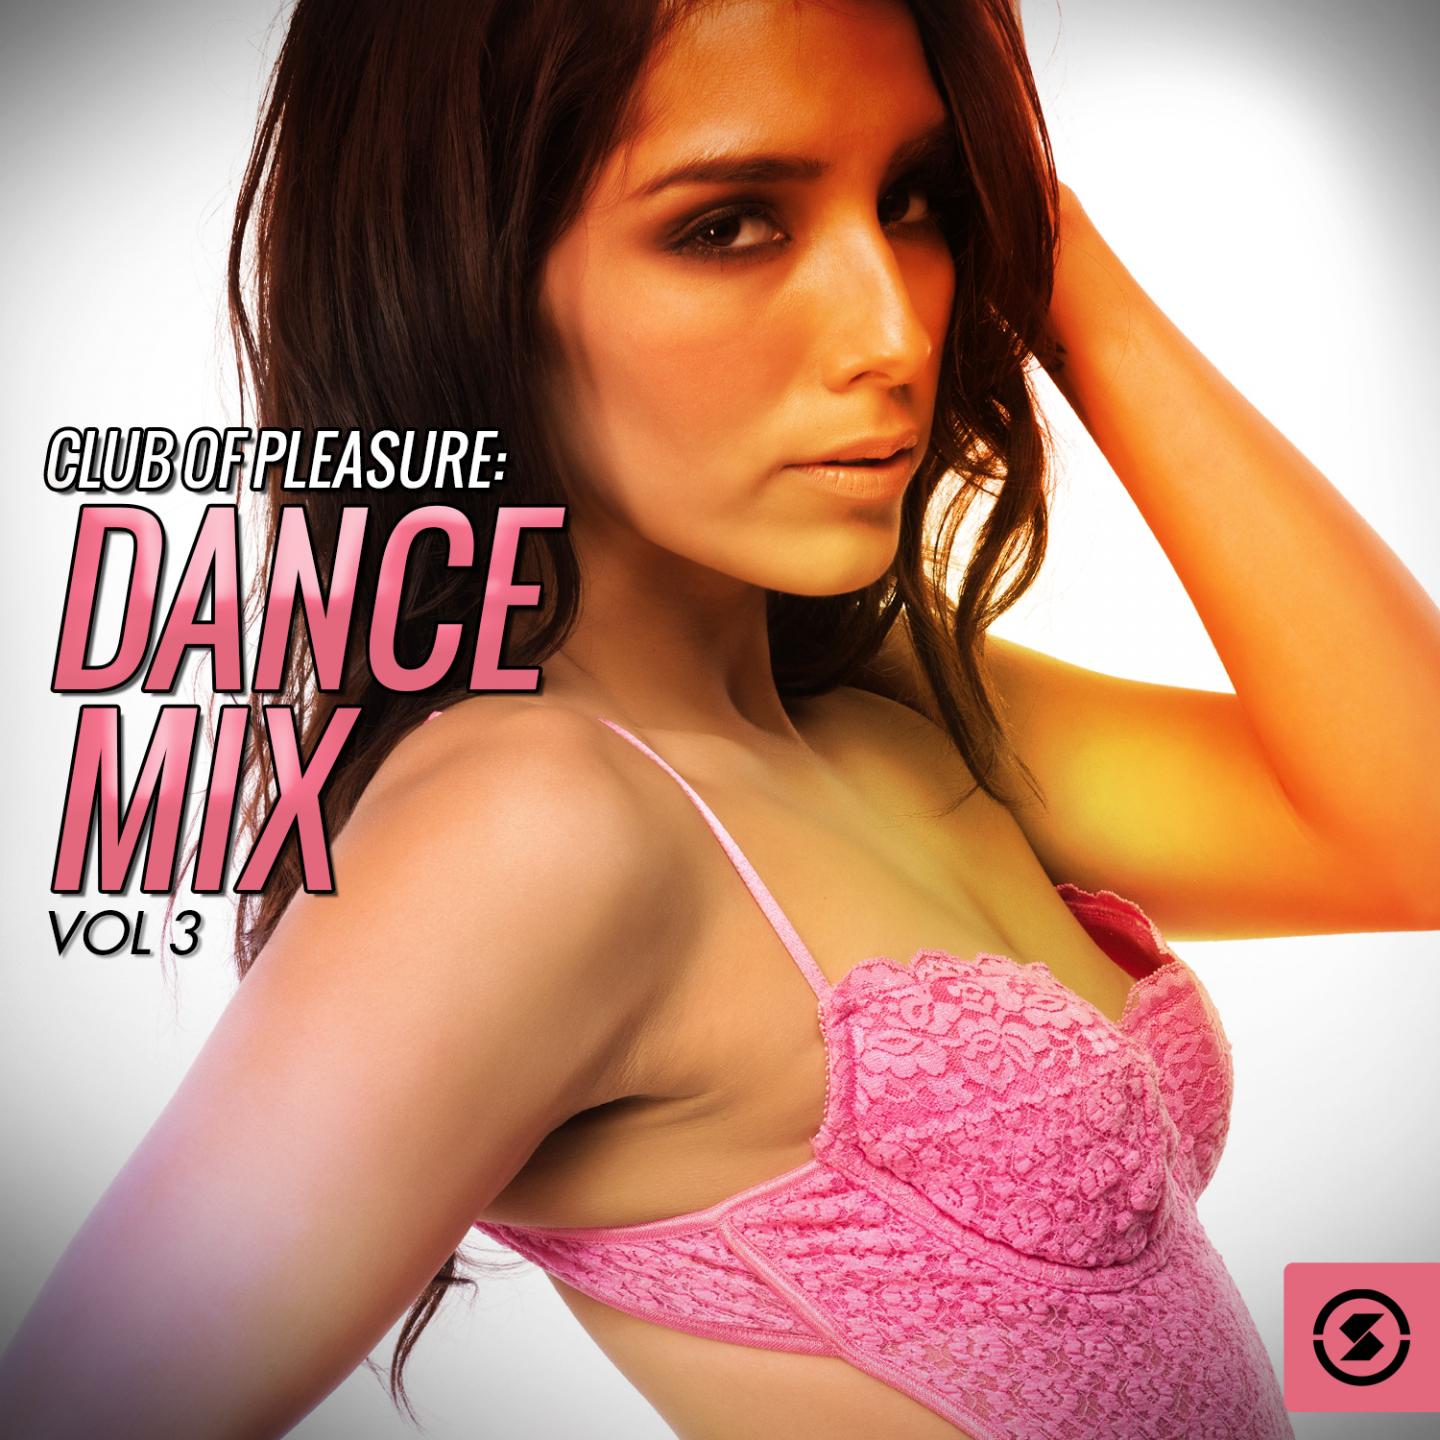 Club of Pleasure Dance Mix, Vol. 3